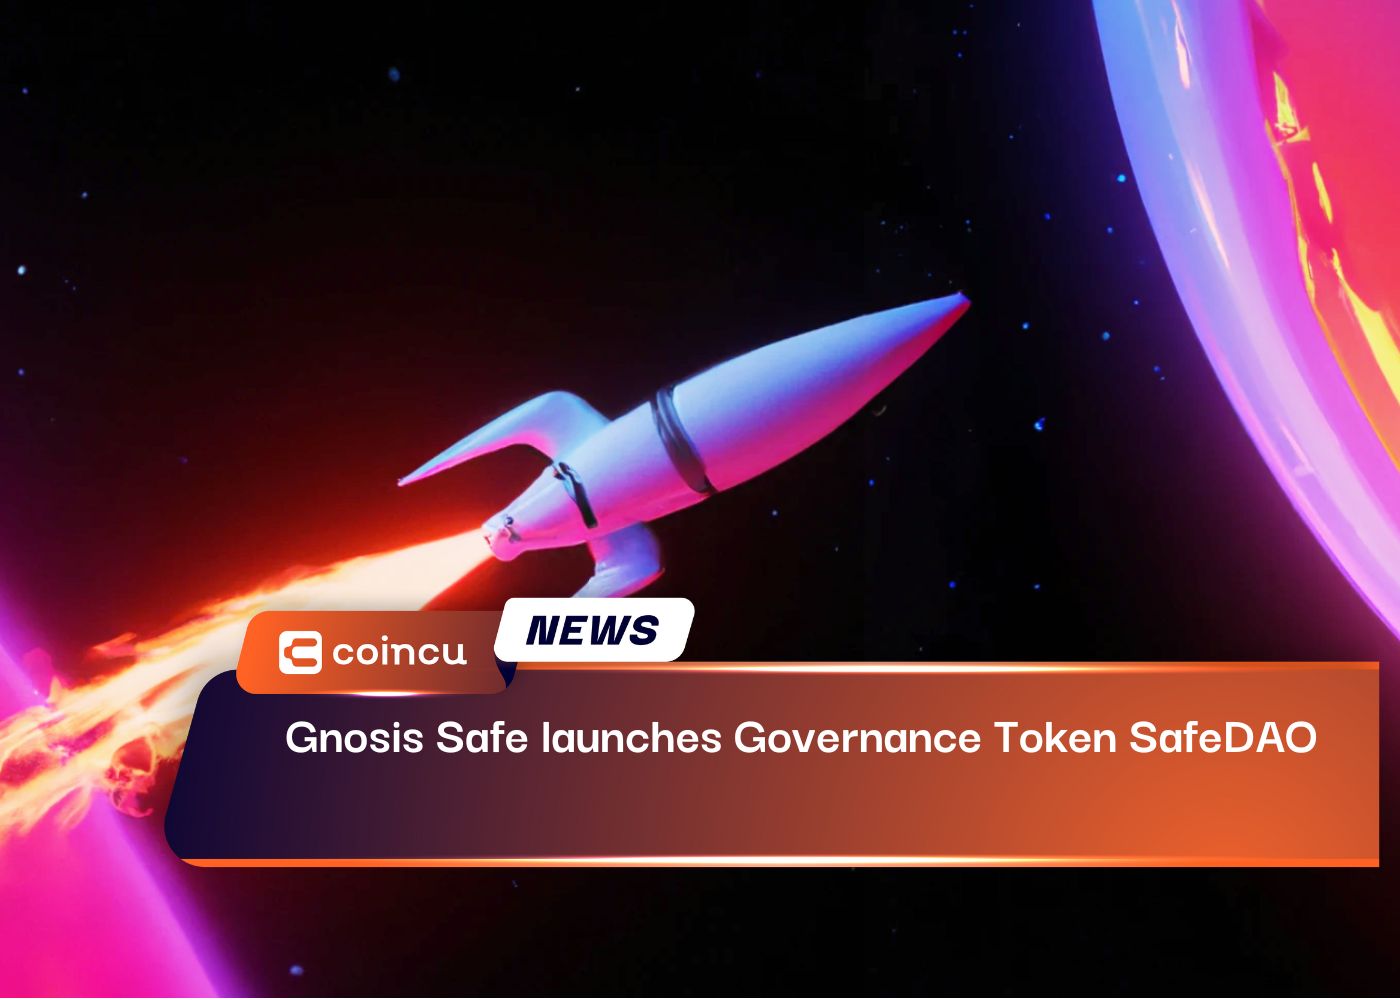 Gnosis Safe launches Governance Token SafeDAO